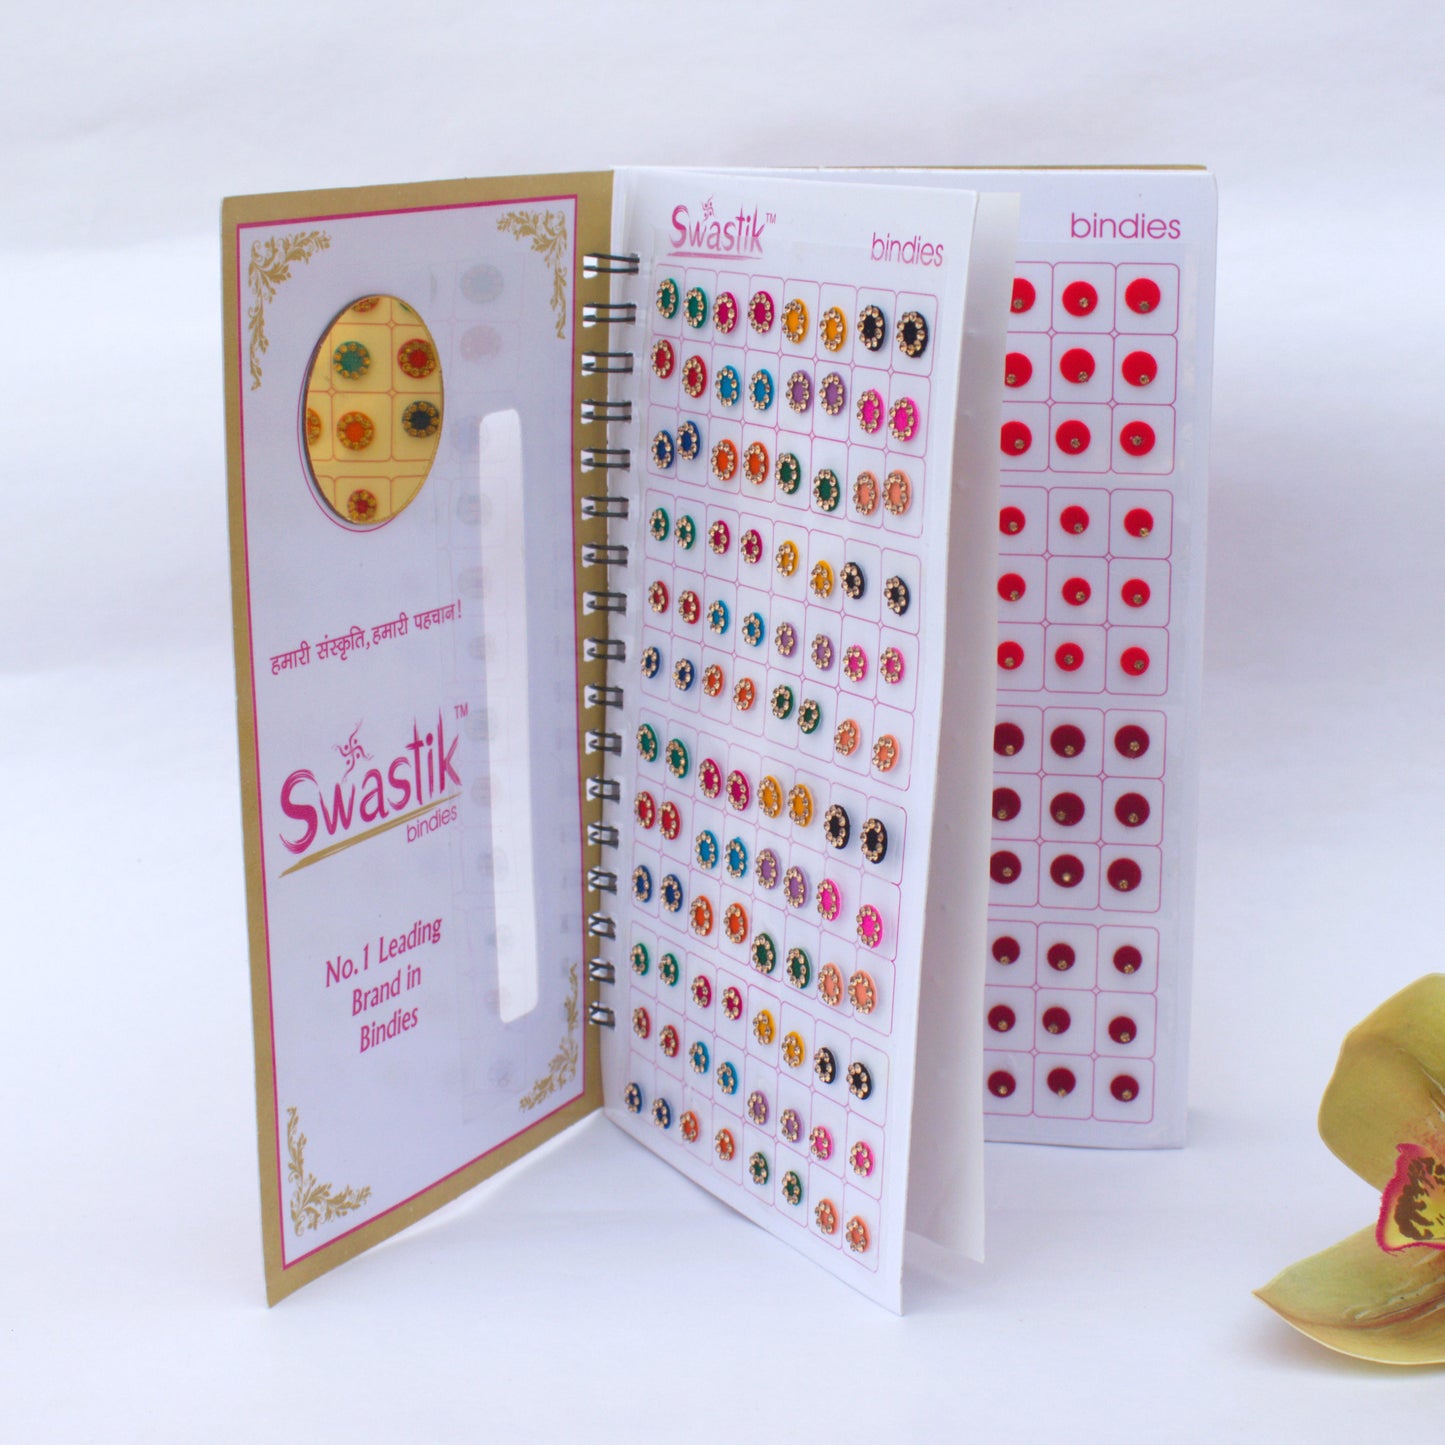 All In One Round Multicolour Mix Fancy Velvet Bridal Bindis Sticker Kumkum Spiral Book - Small Size - Swastik